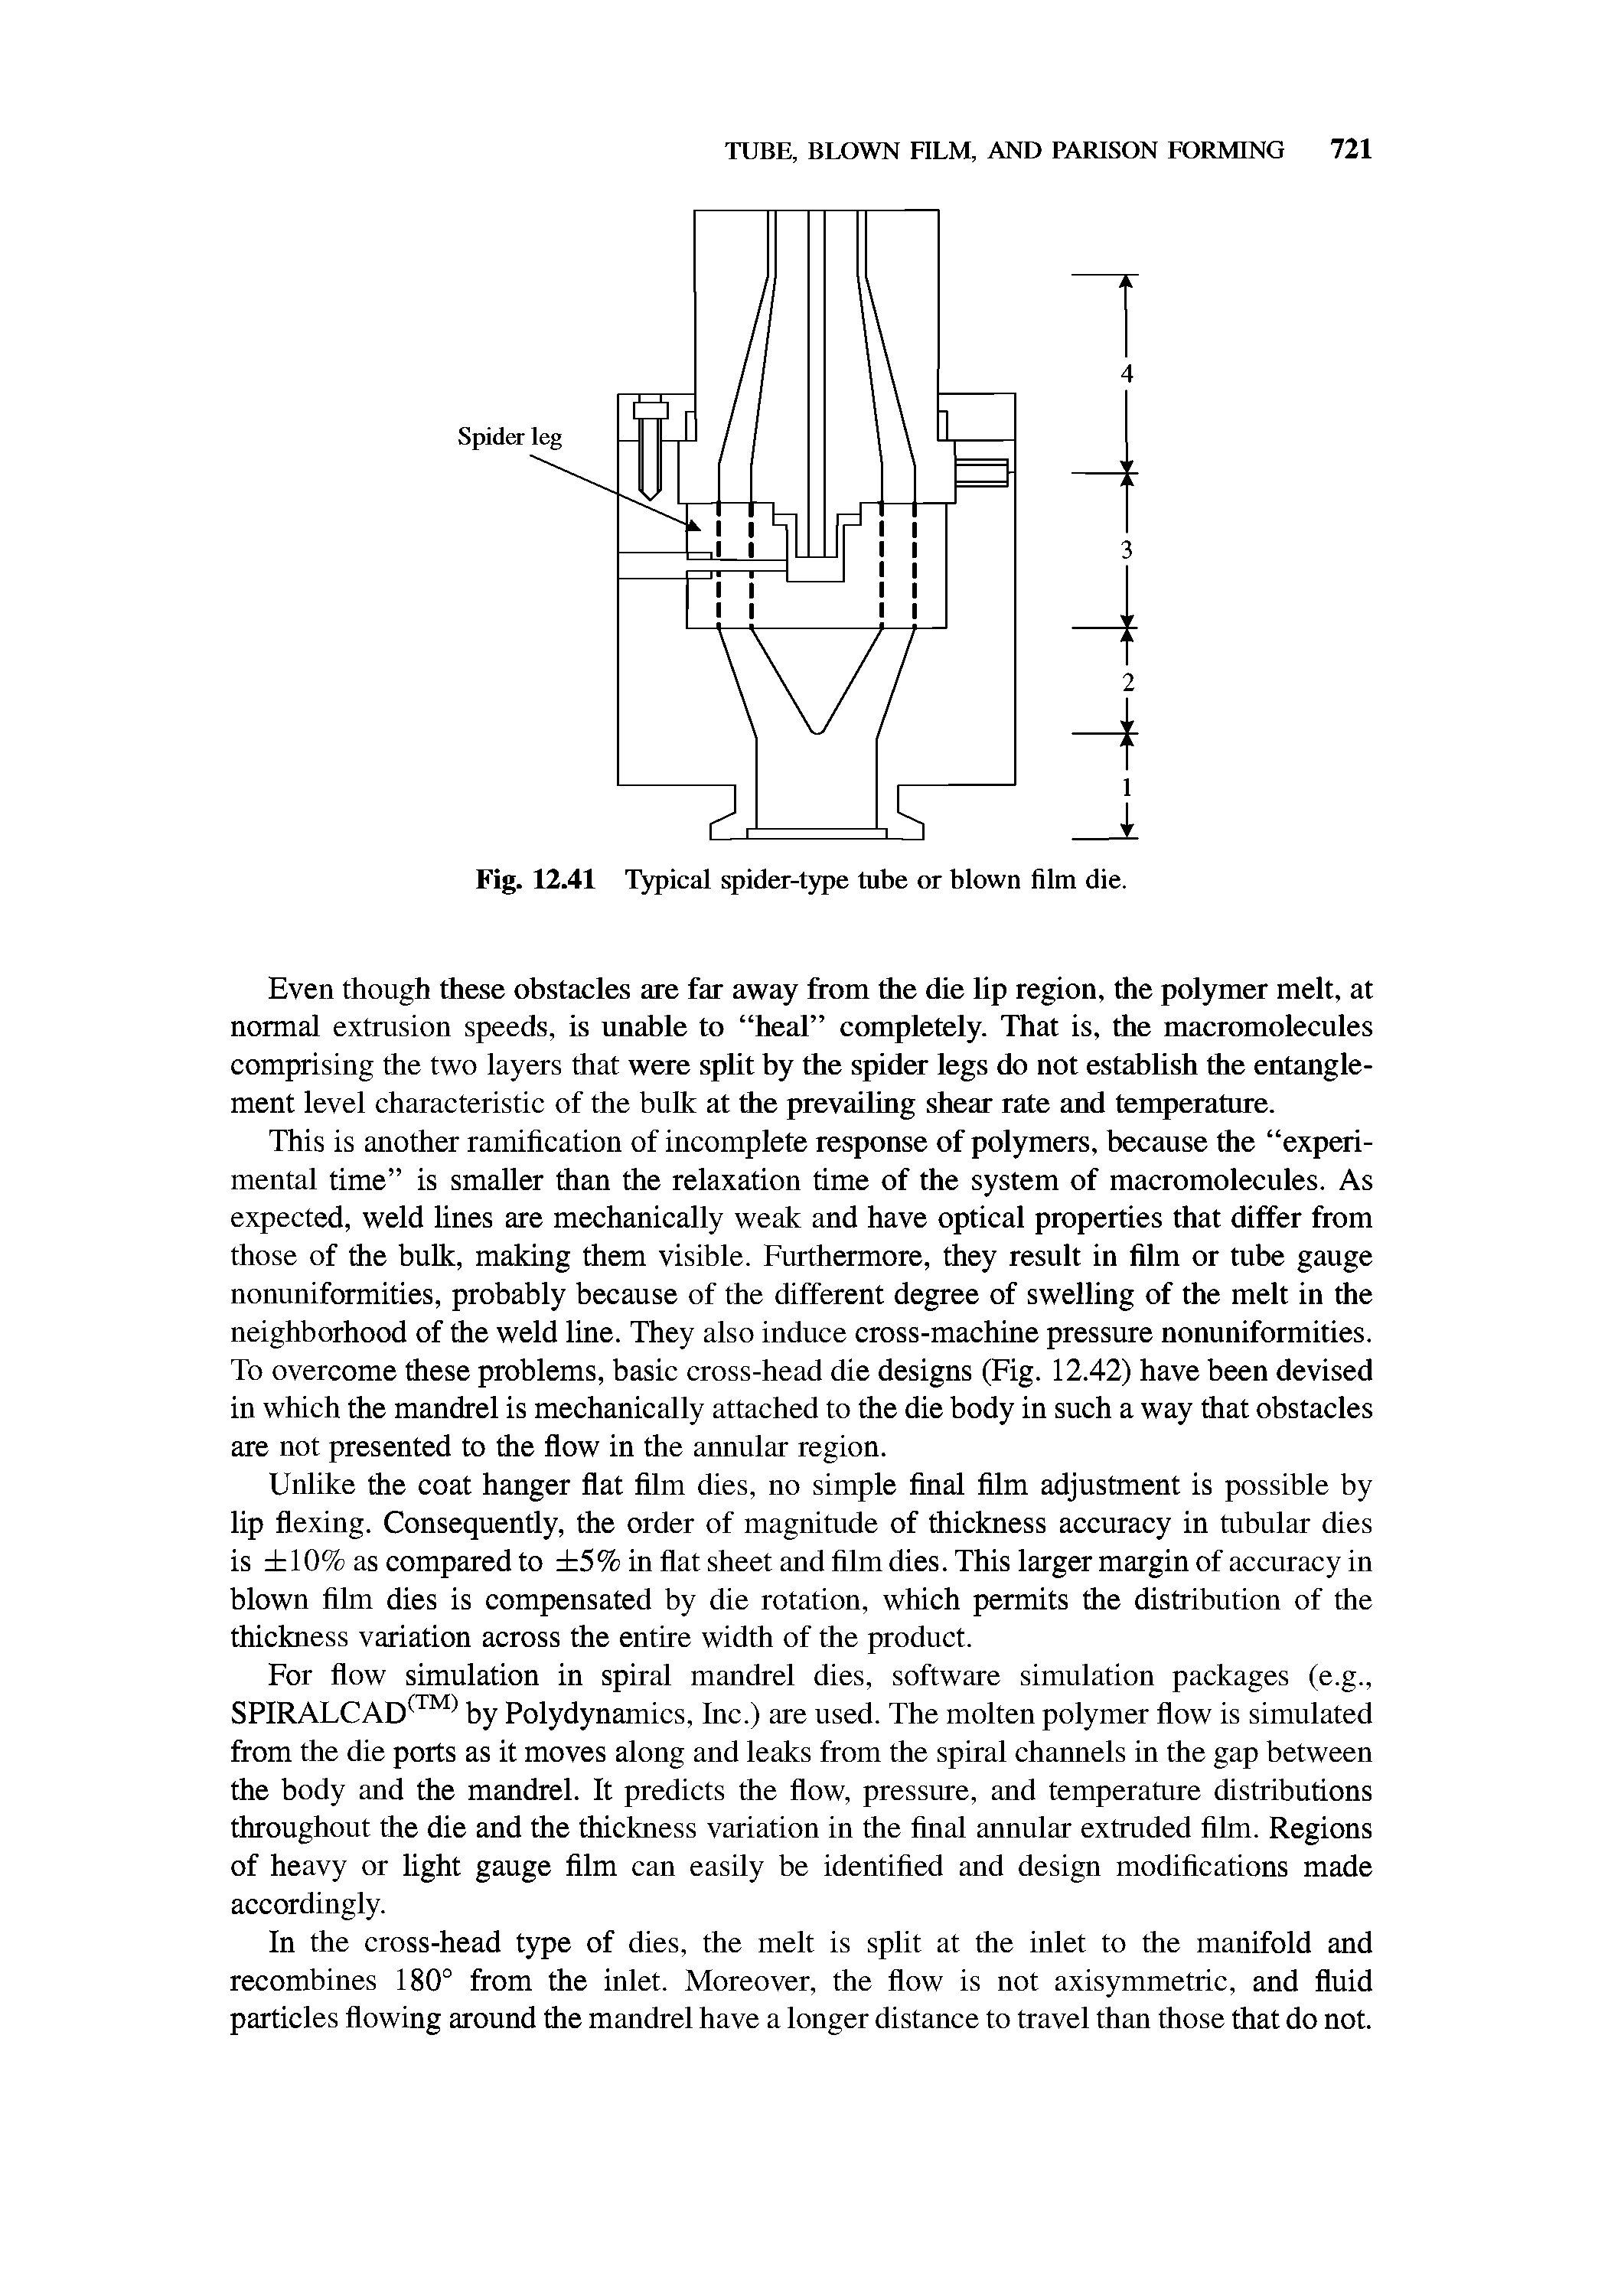 Fig. 12.41 Typical spider-type tube or blown film die.